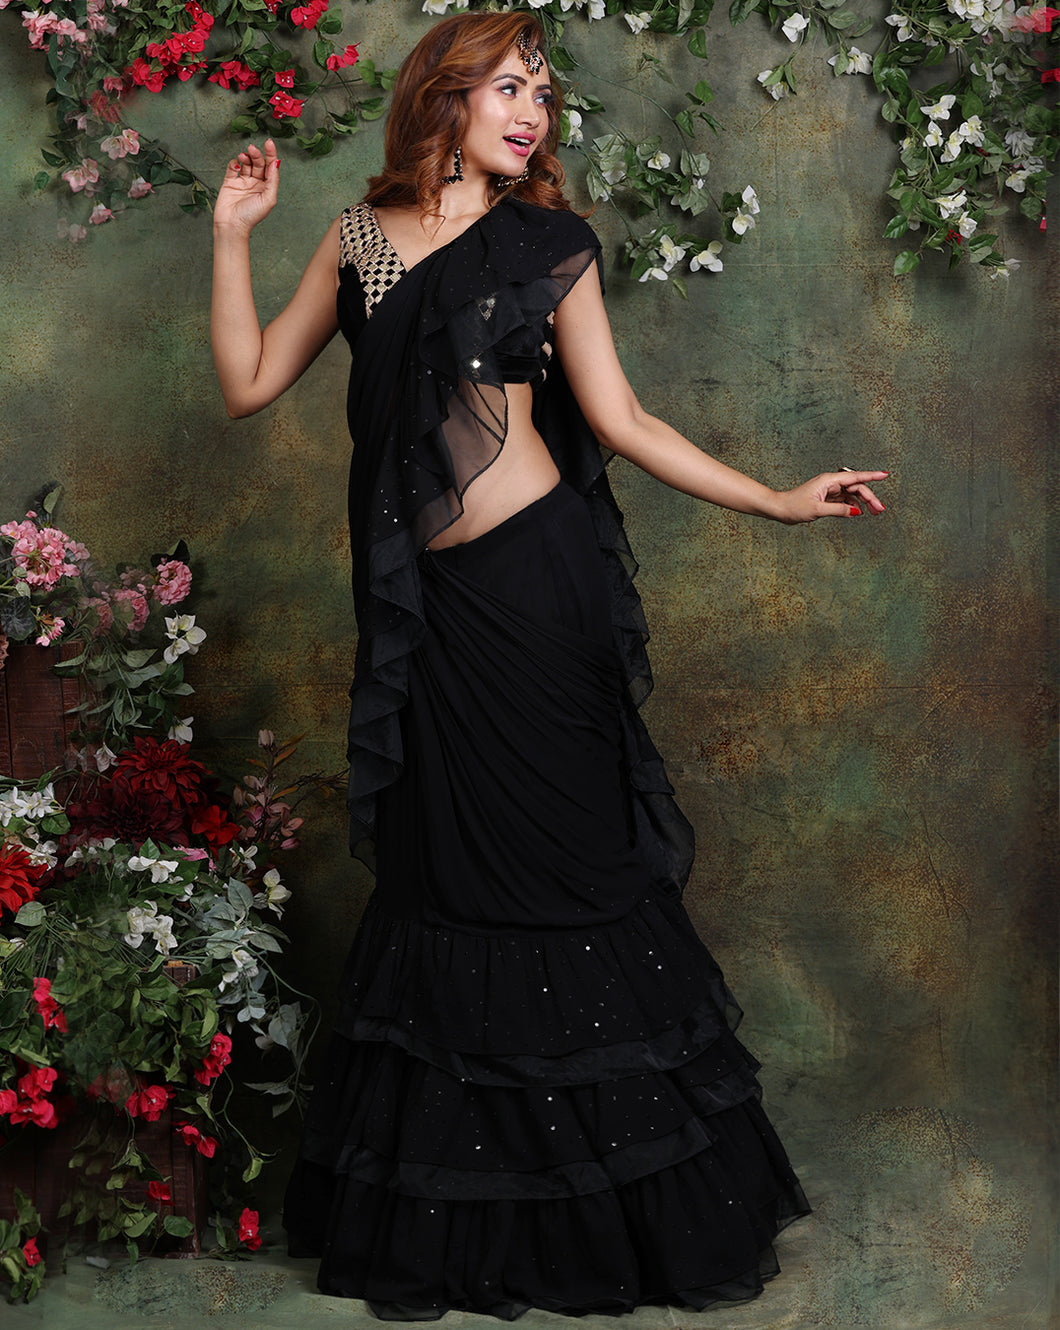 The Black Ruffle Sari